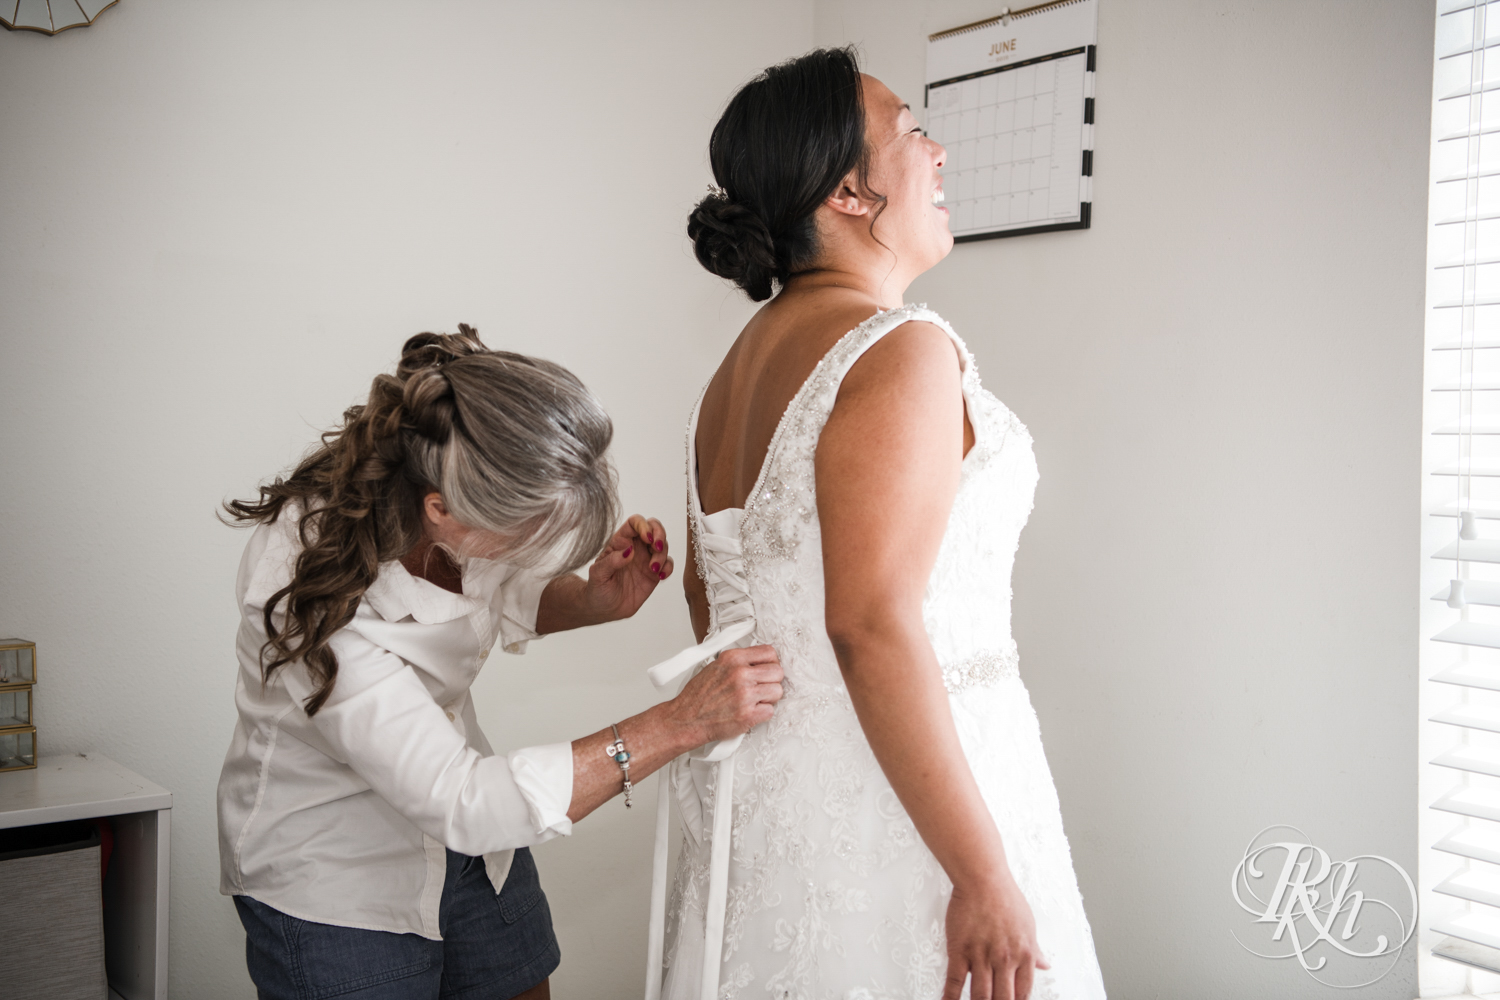 Mom helping bride get wedding dress laced up.